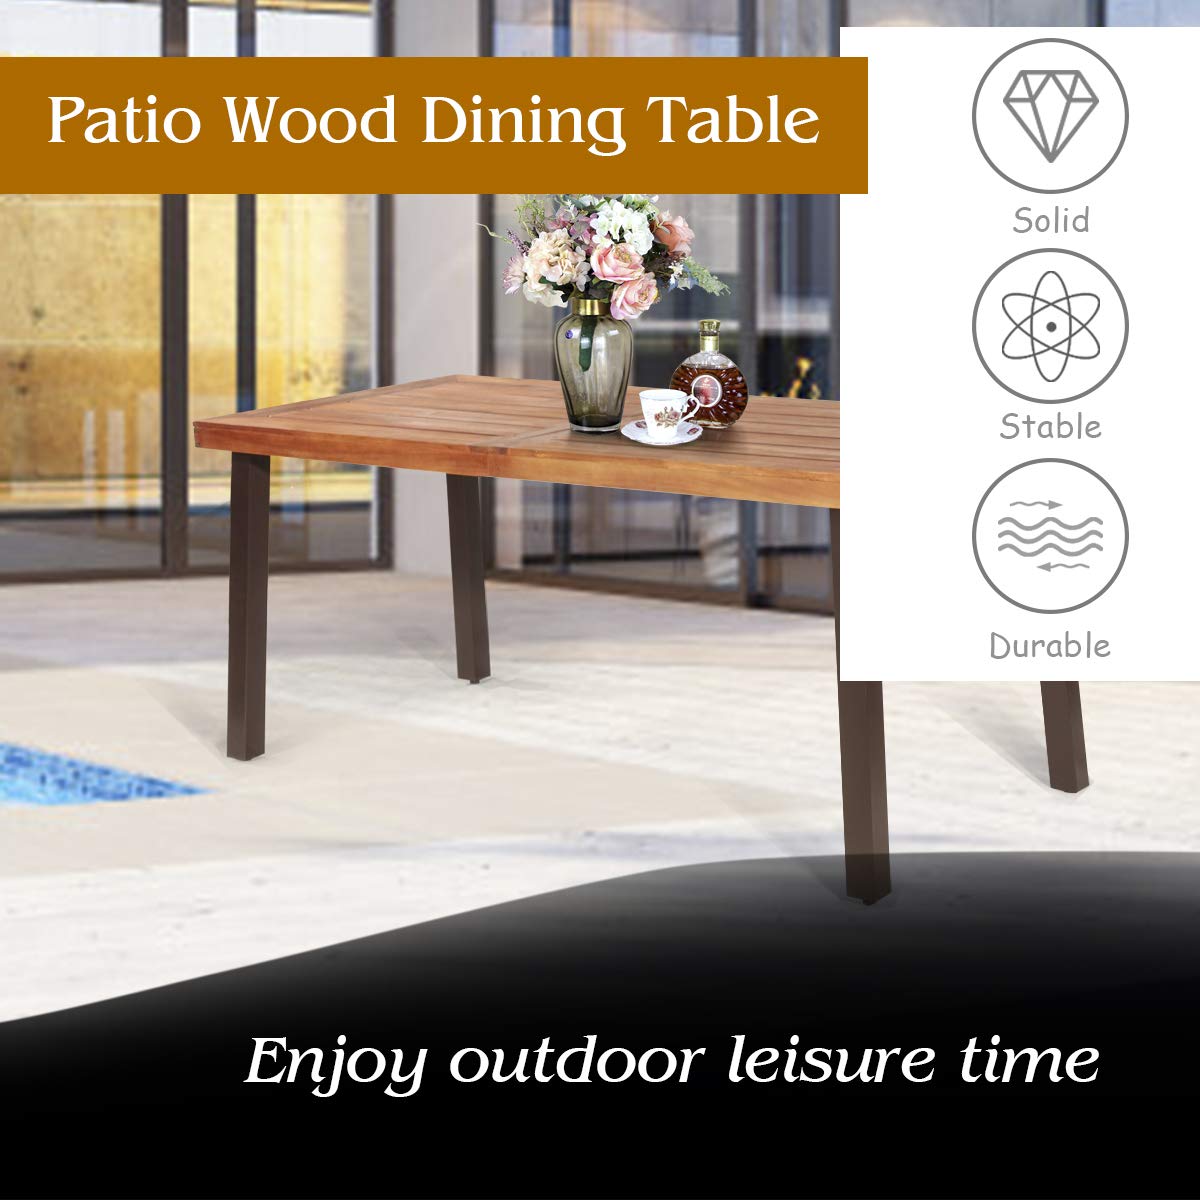 Giantex Patio Dining Table with Umbrella Hole, Outdoor Picnic Table for Backyard, Garden, Lawn, Farmhouse, Acacia Wood Rectangular Table with Metal Legs, Rustic Brown